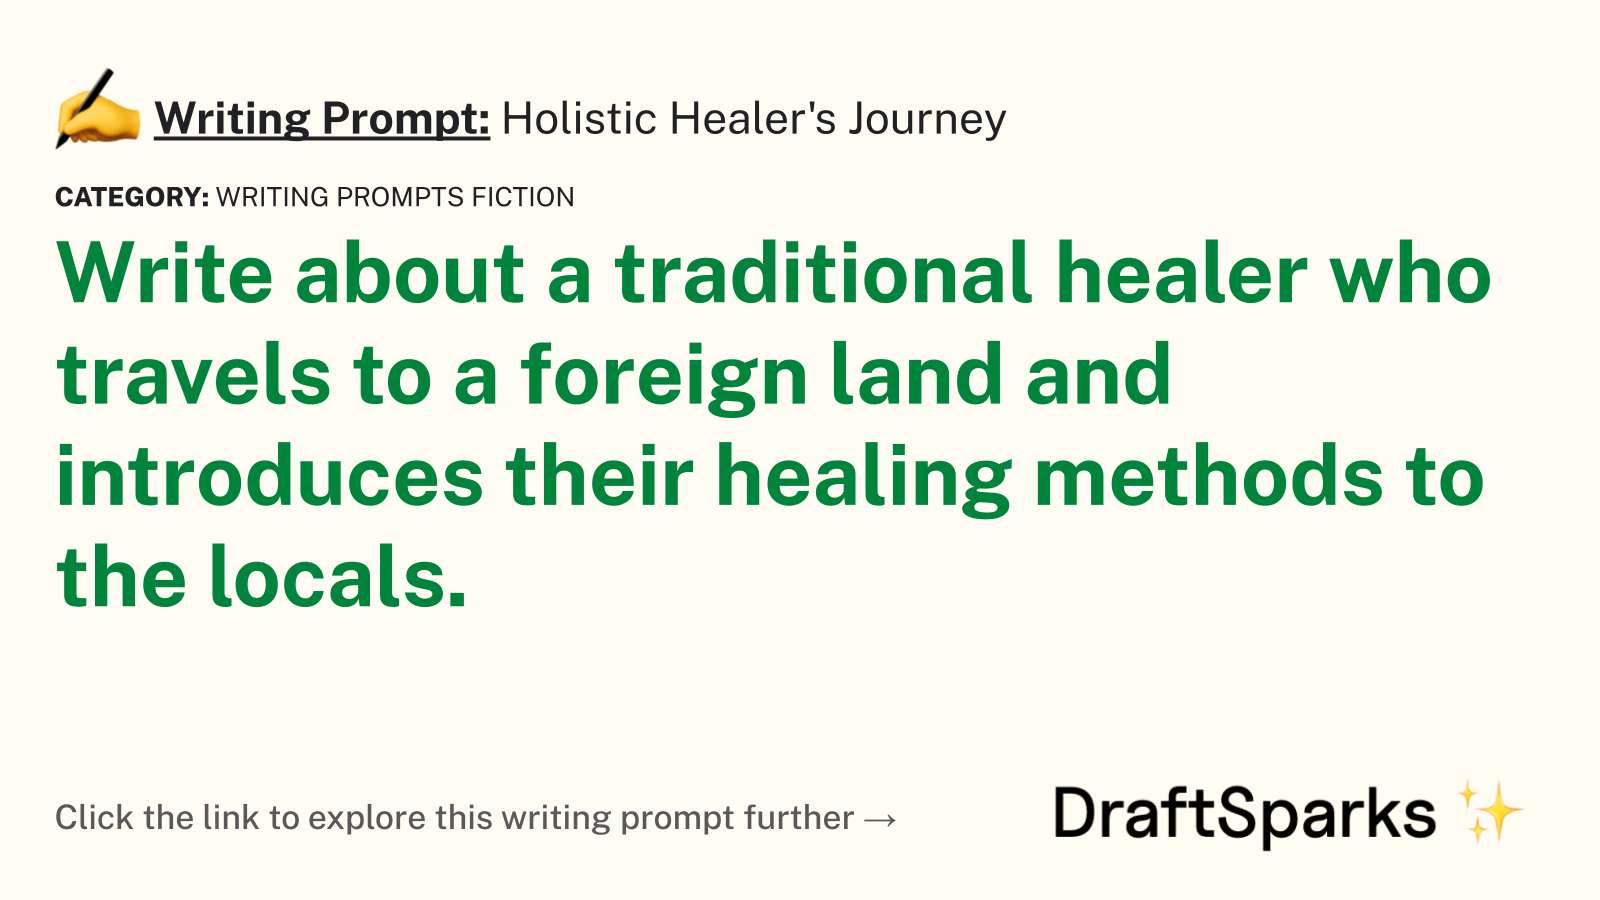 Holistic Healer’s Journey